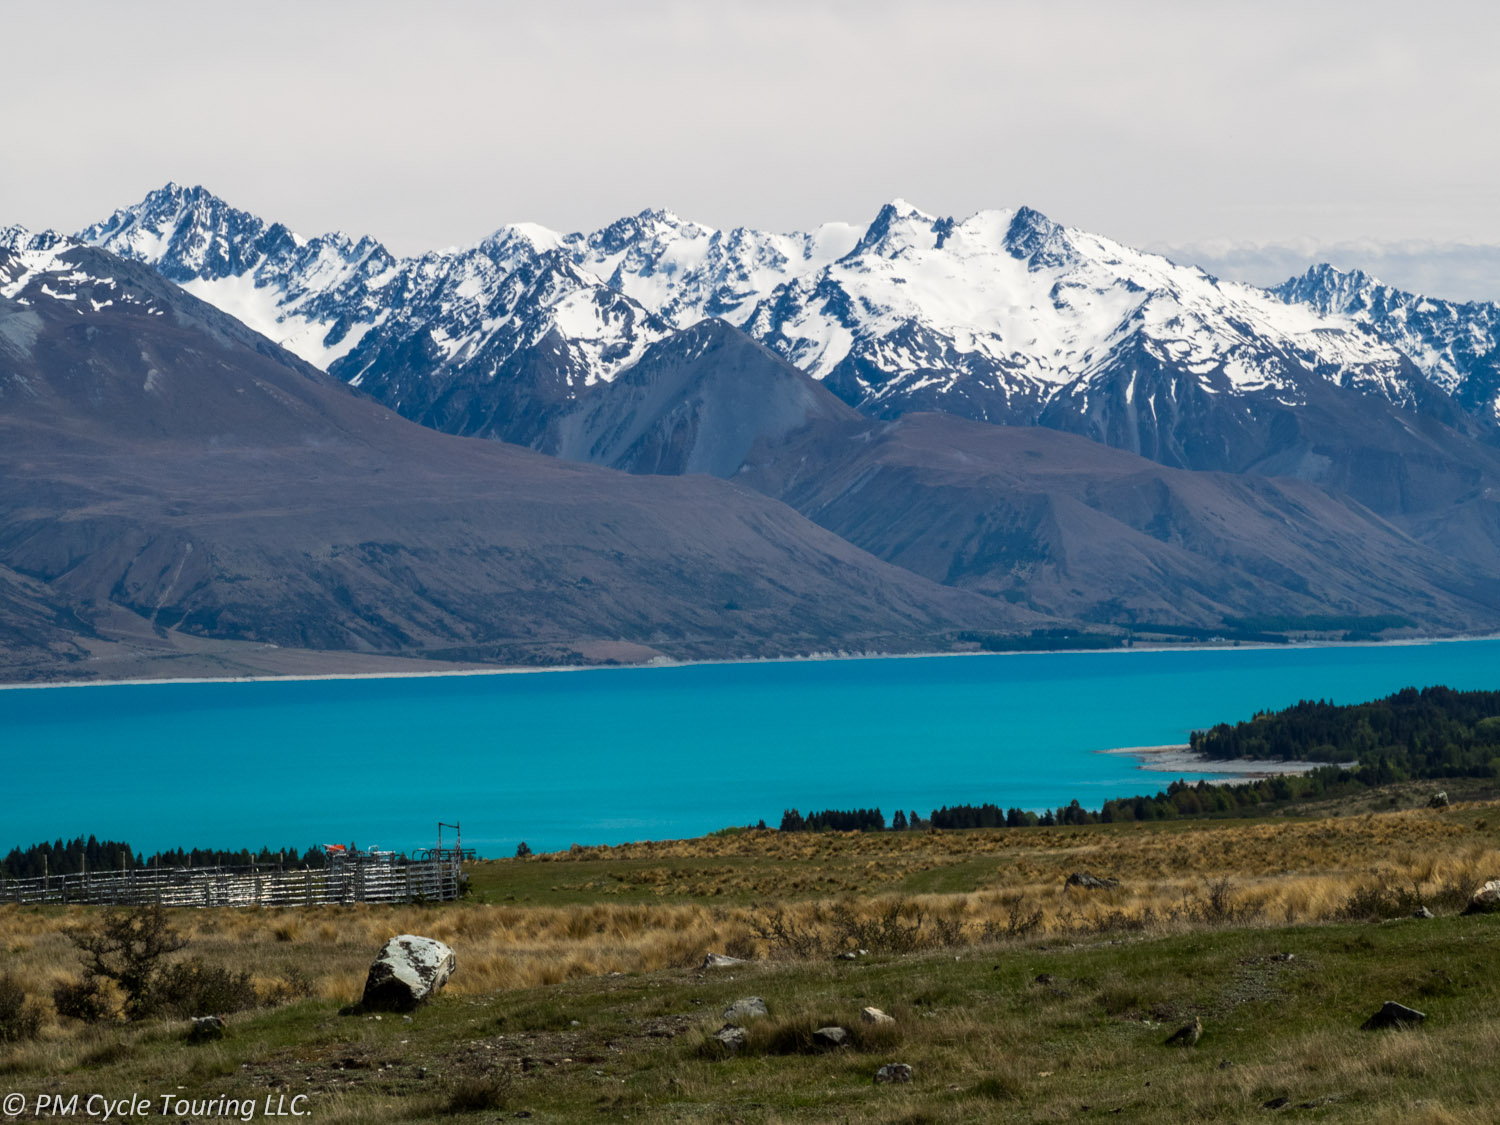 Teal blue Lake Pukaki and snow capped mountains